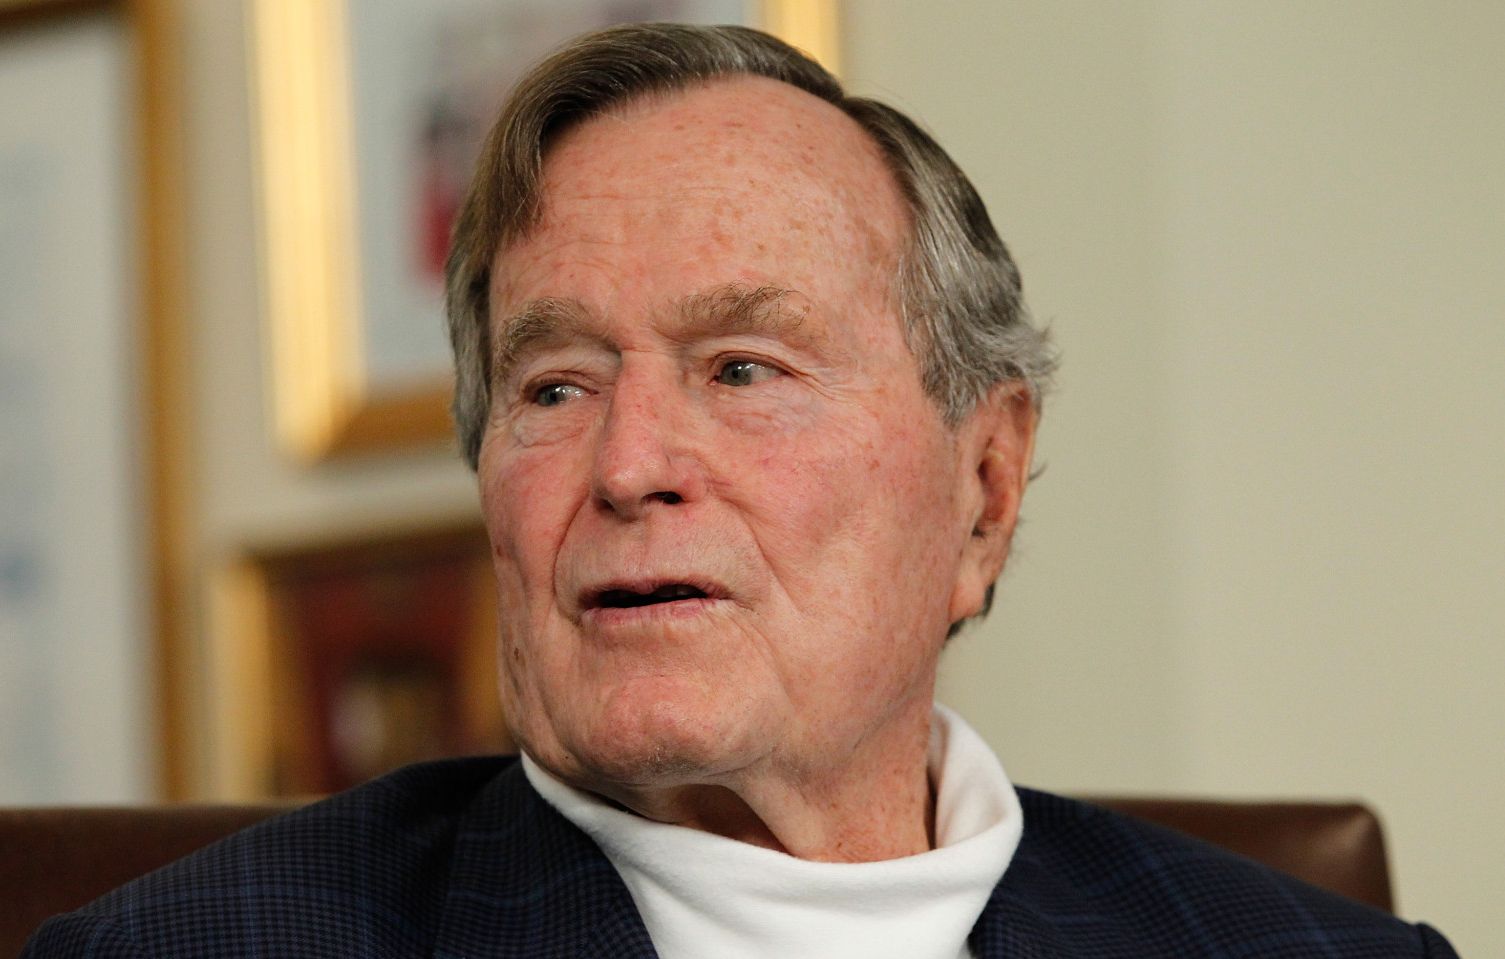 George Bush padre, hospitalizado en Texas por problemas respiratorios